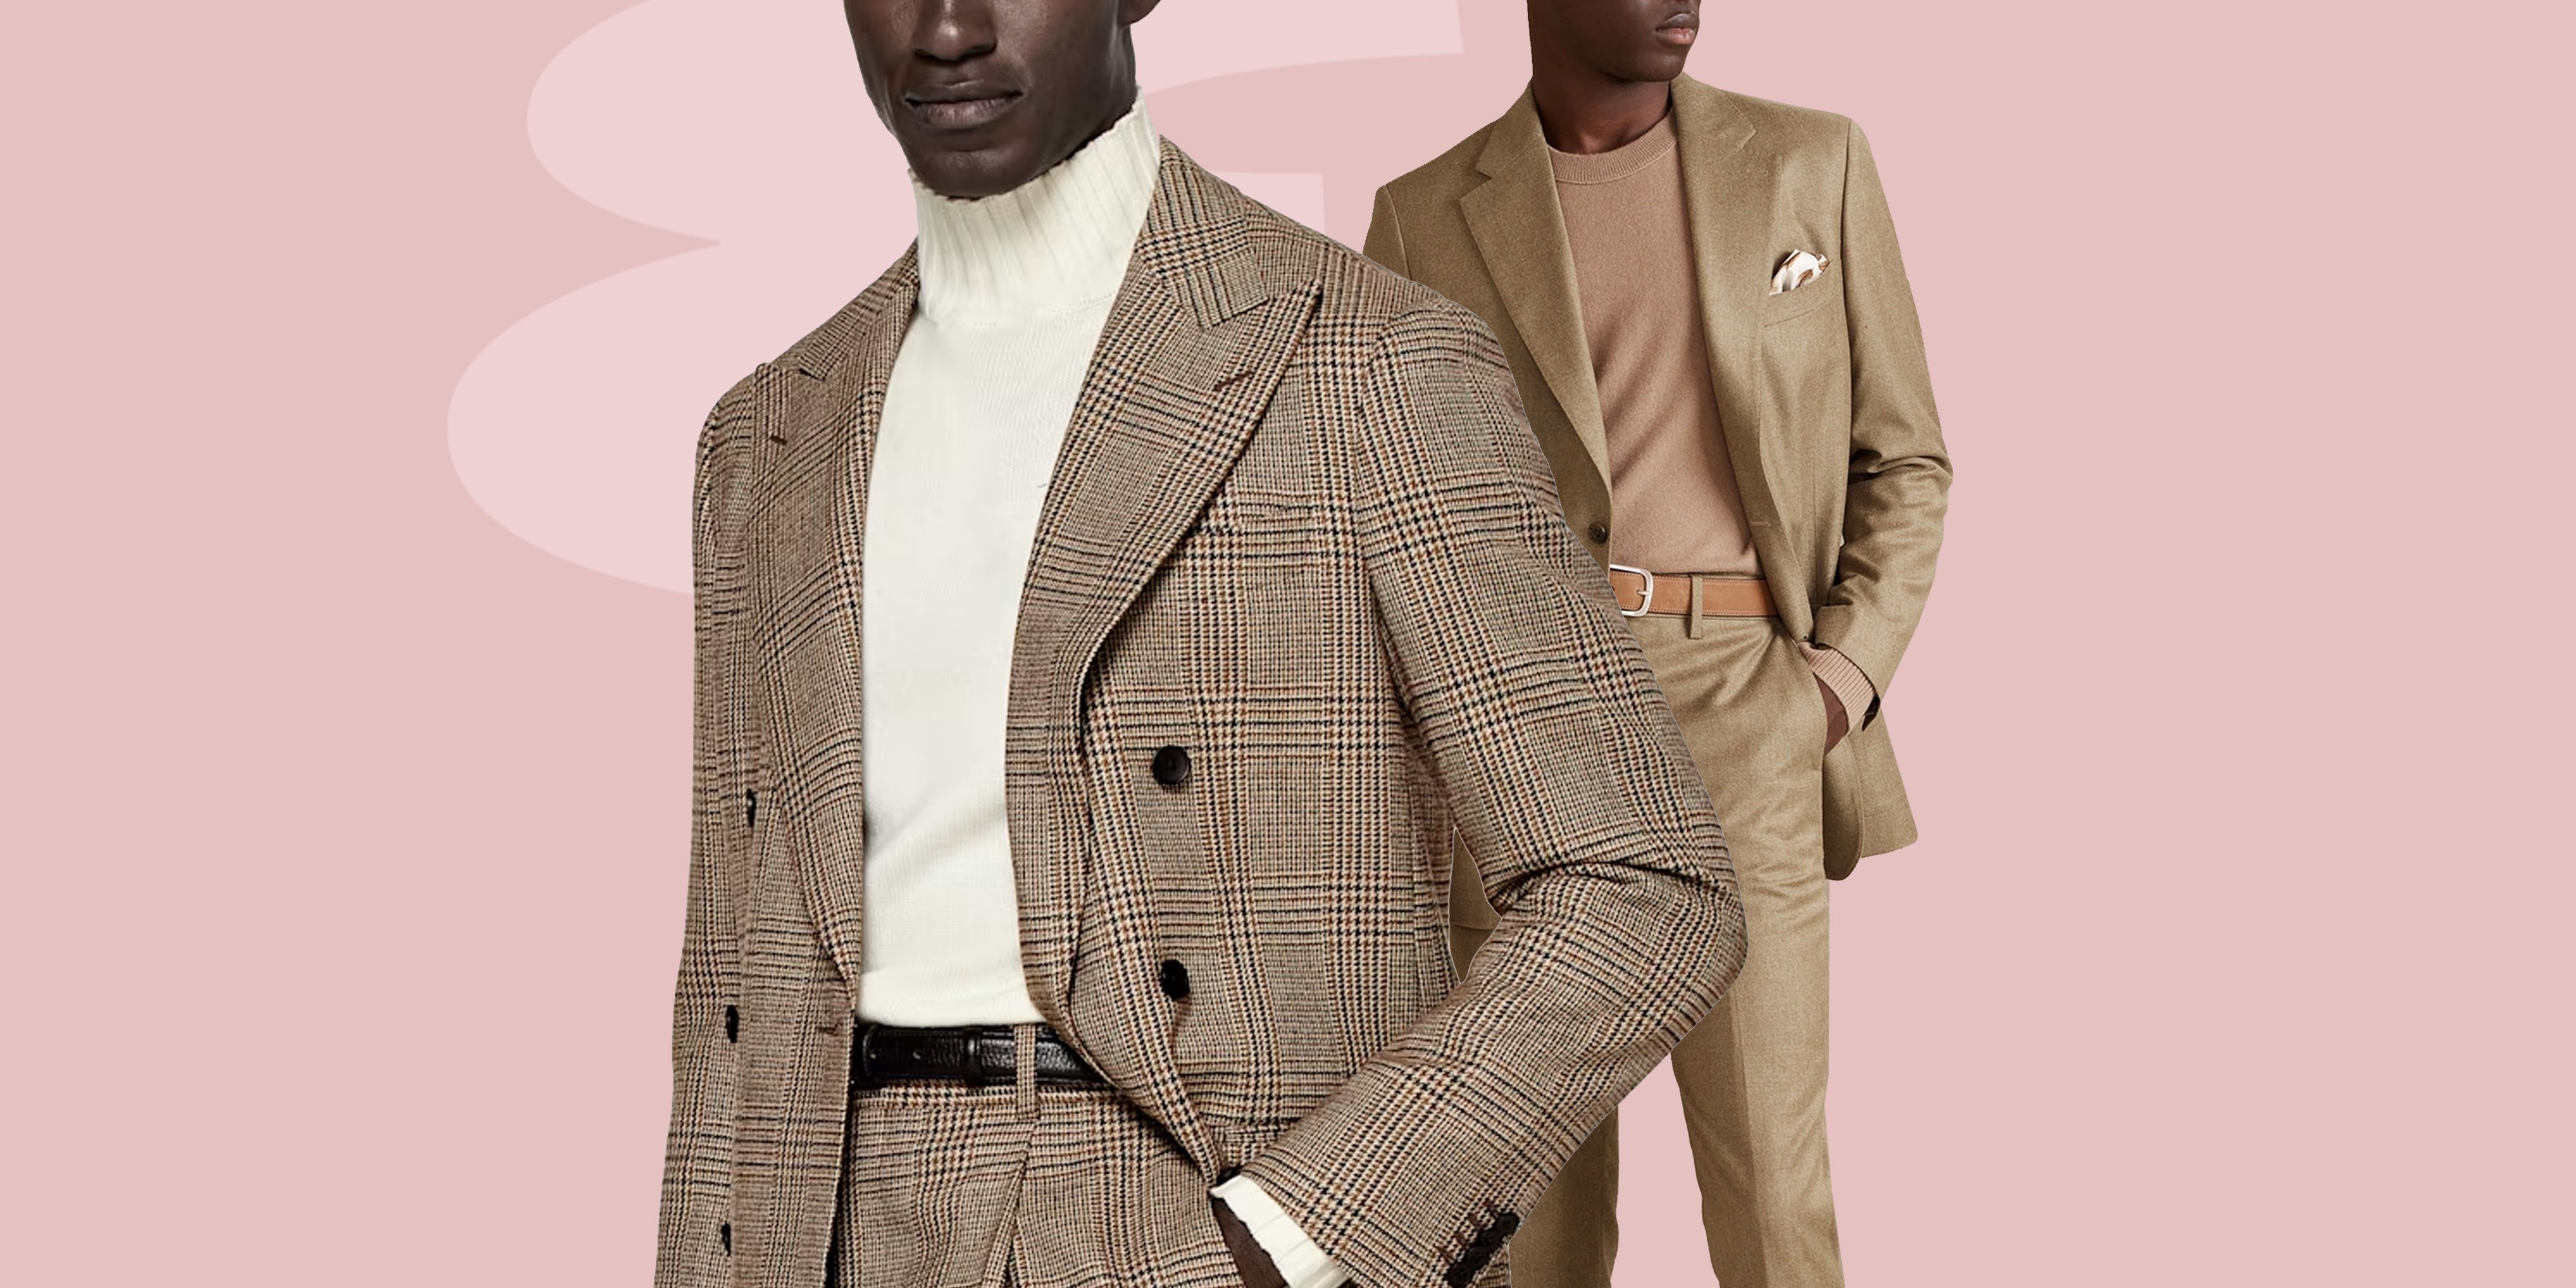 Brown Men's Suit Guide | Color in Menswear